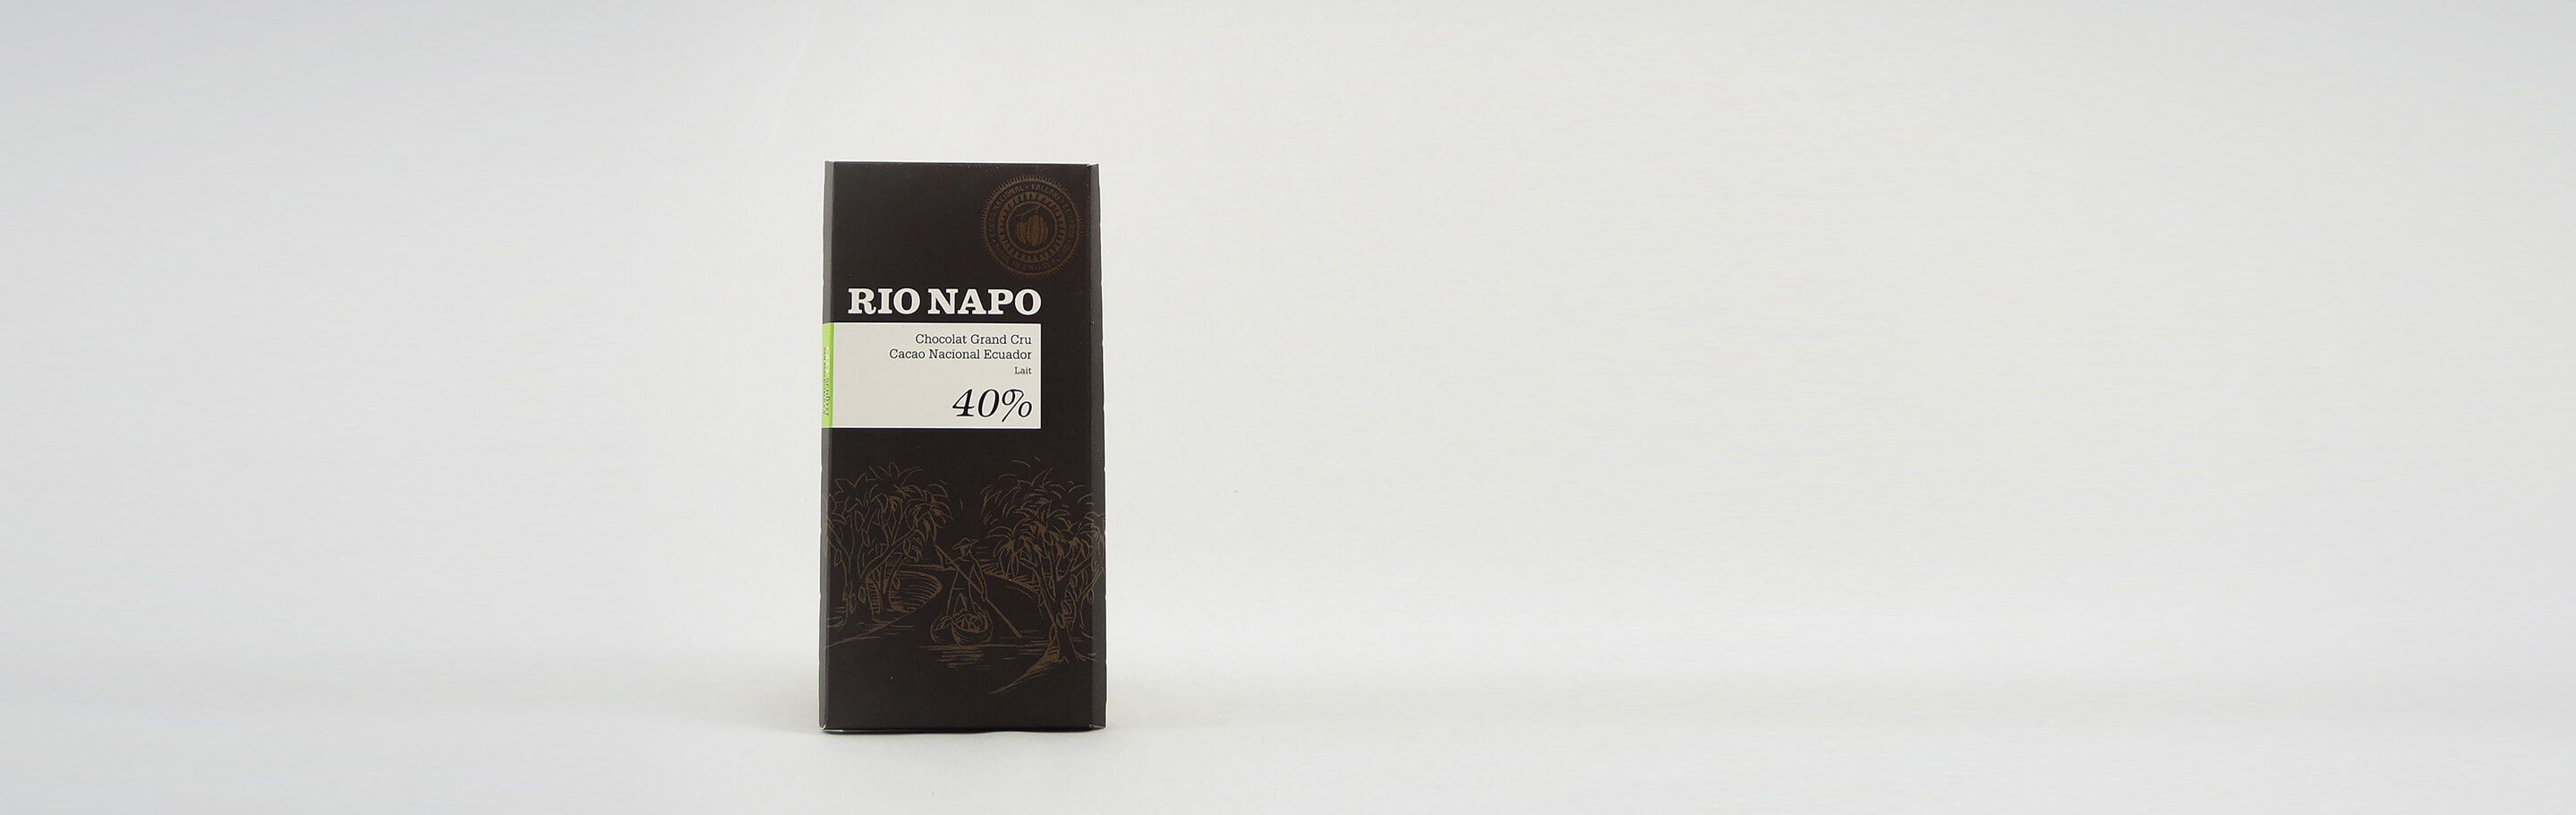 Rio Napo Chocolat Chaud Grand Cru 70% 900g bio - Original Food